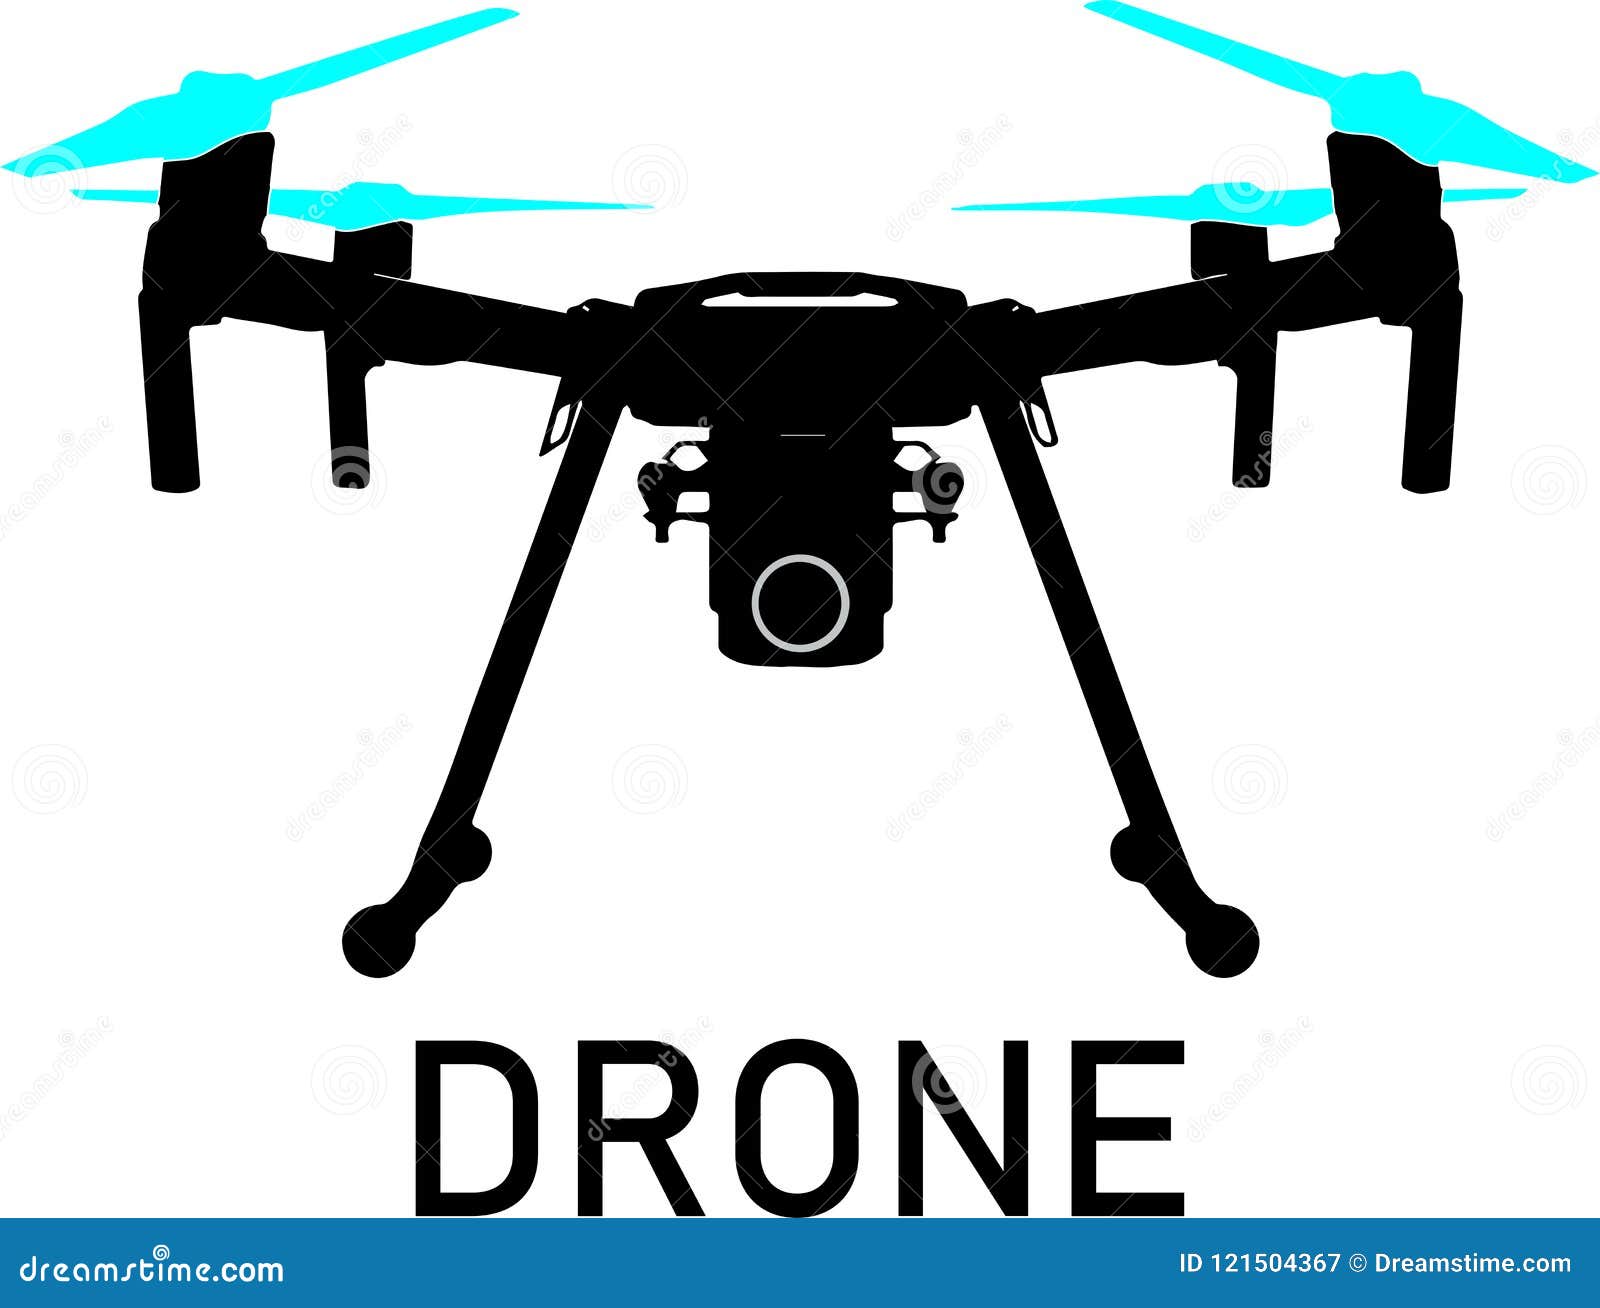 Drone logo stock illustration. of - 121504367